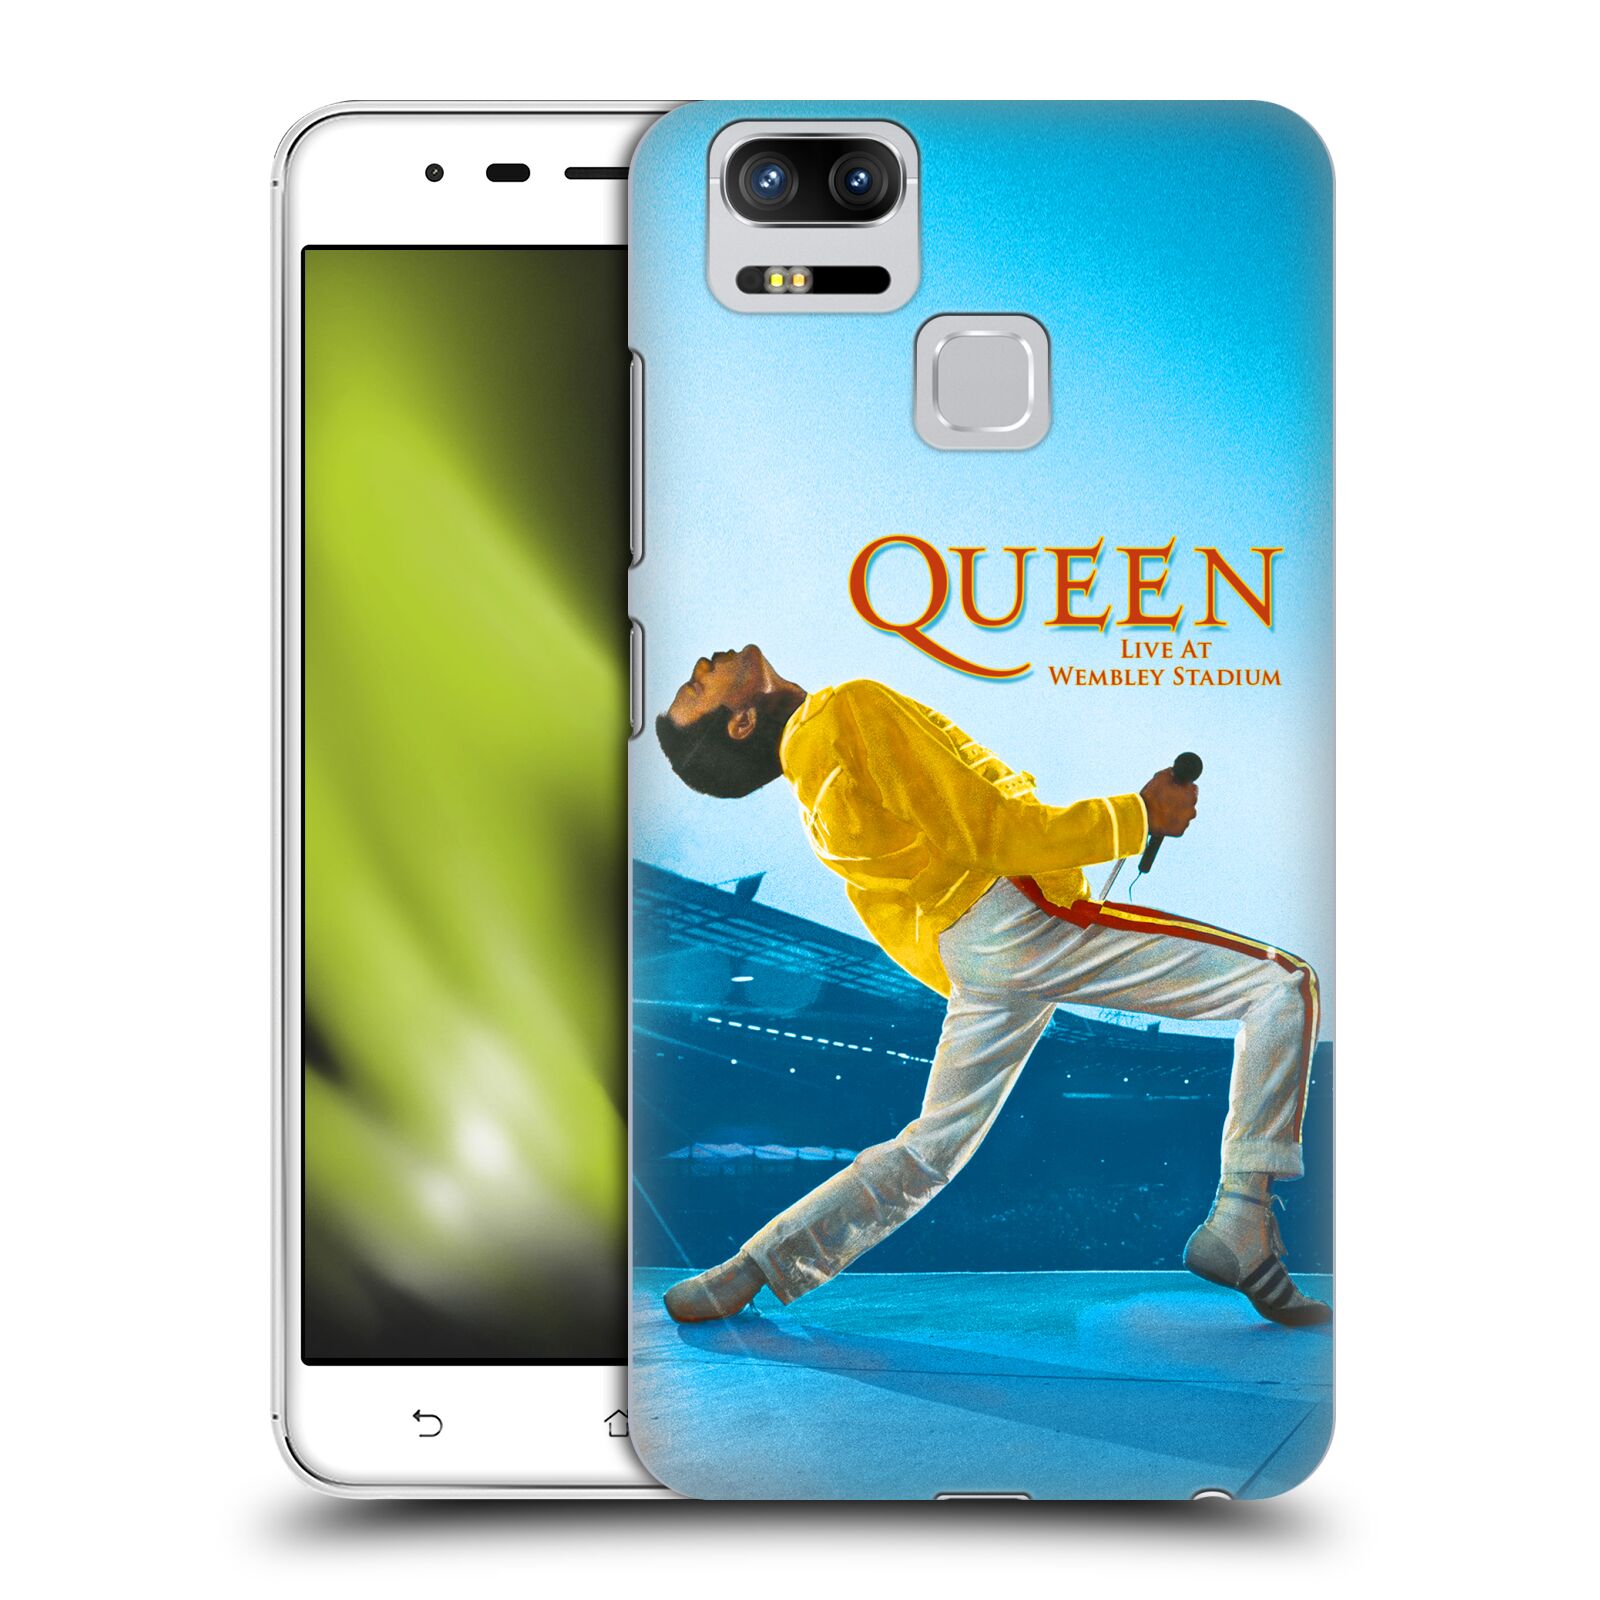 HEAD CASE plastový obal na mobil Asus Zenfone 3 Zoom ZE553KL zpěvák Queen skupina Freddie Mercury